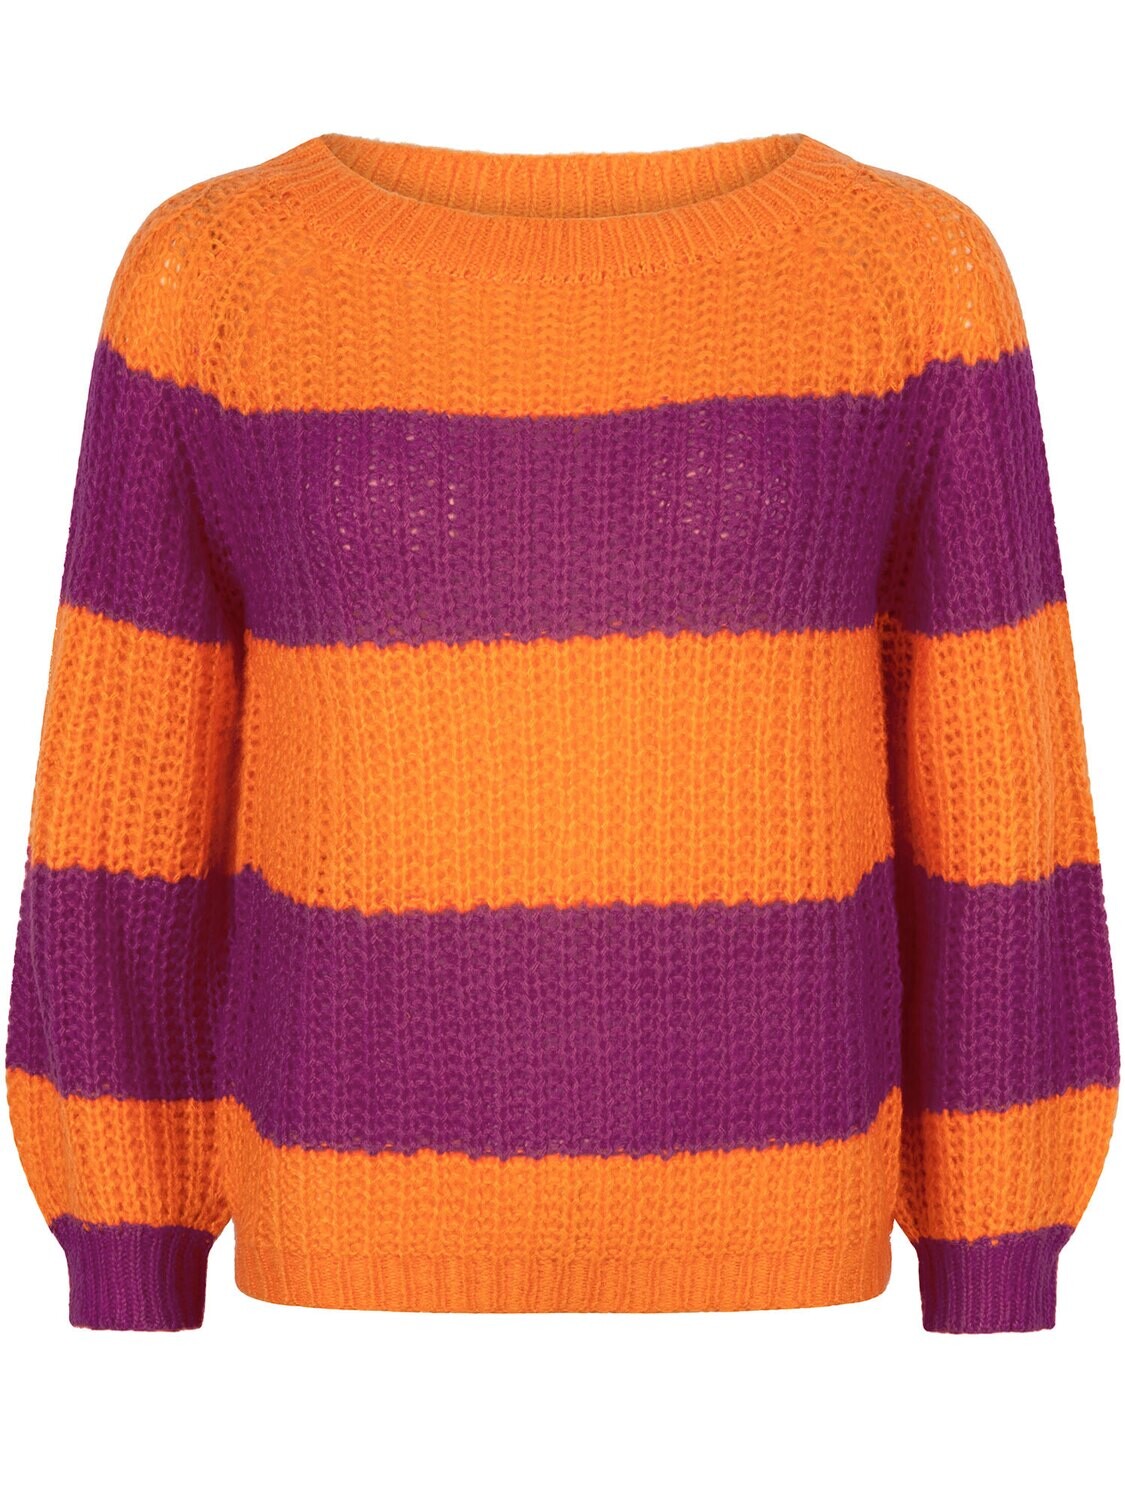 Knitted Sweater Frankie Orange Purple